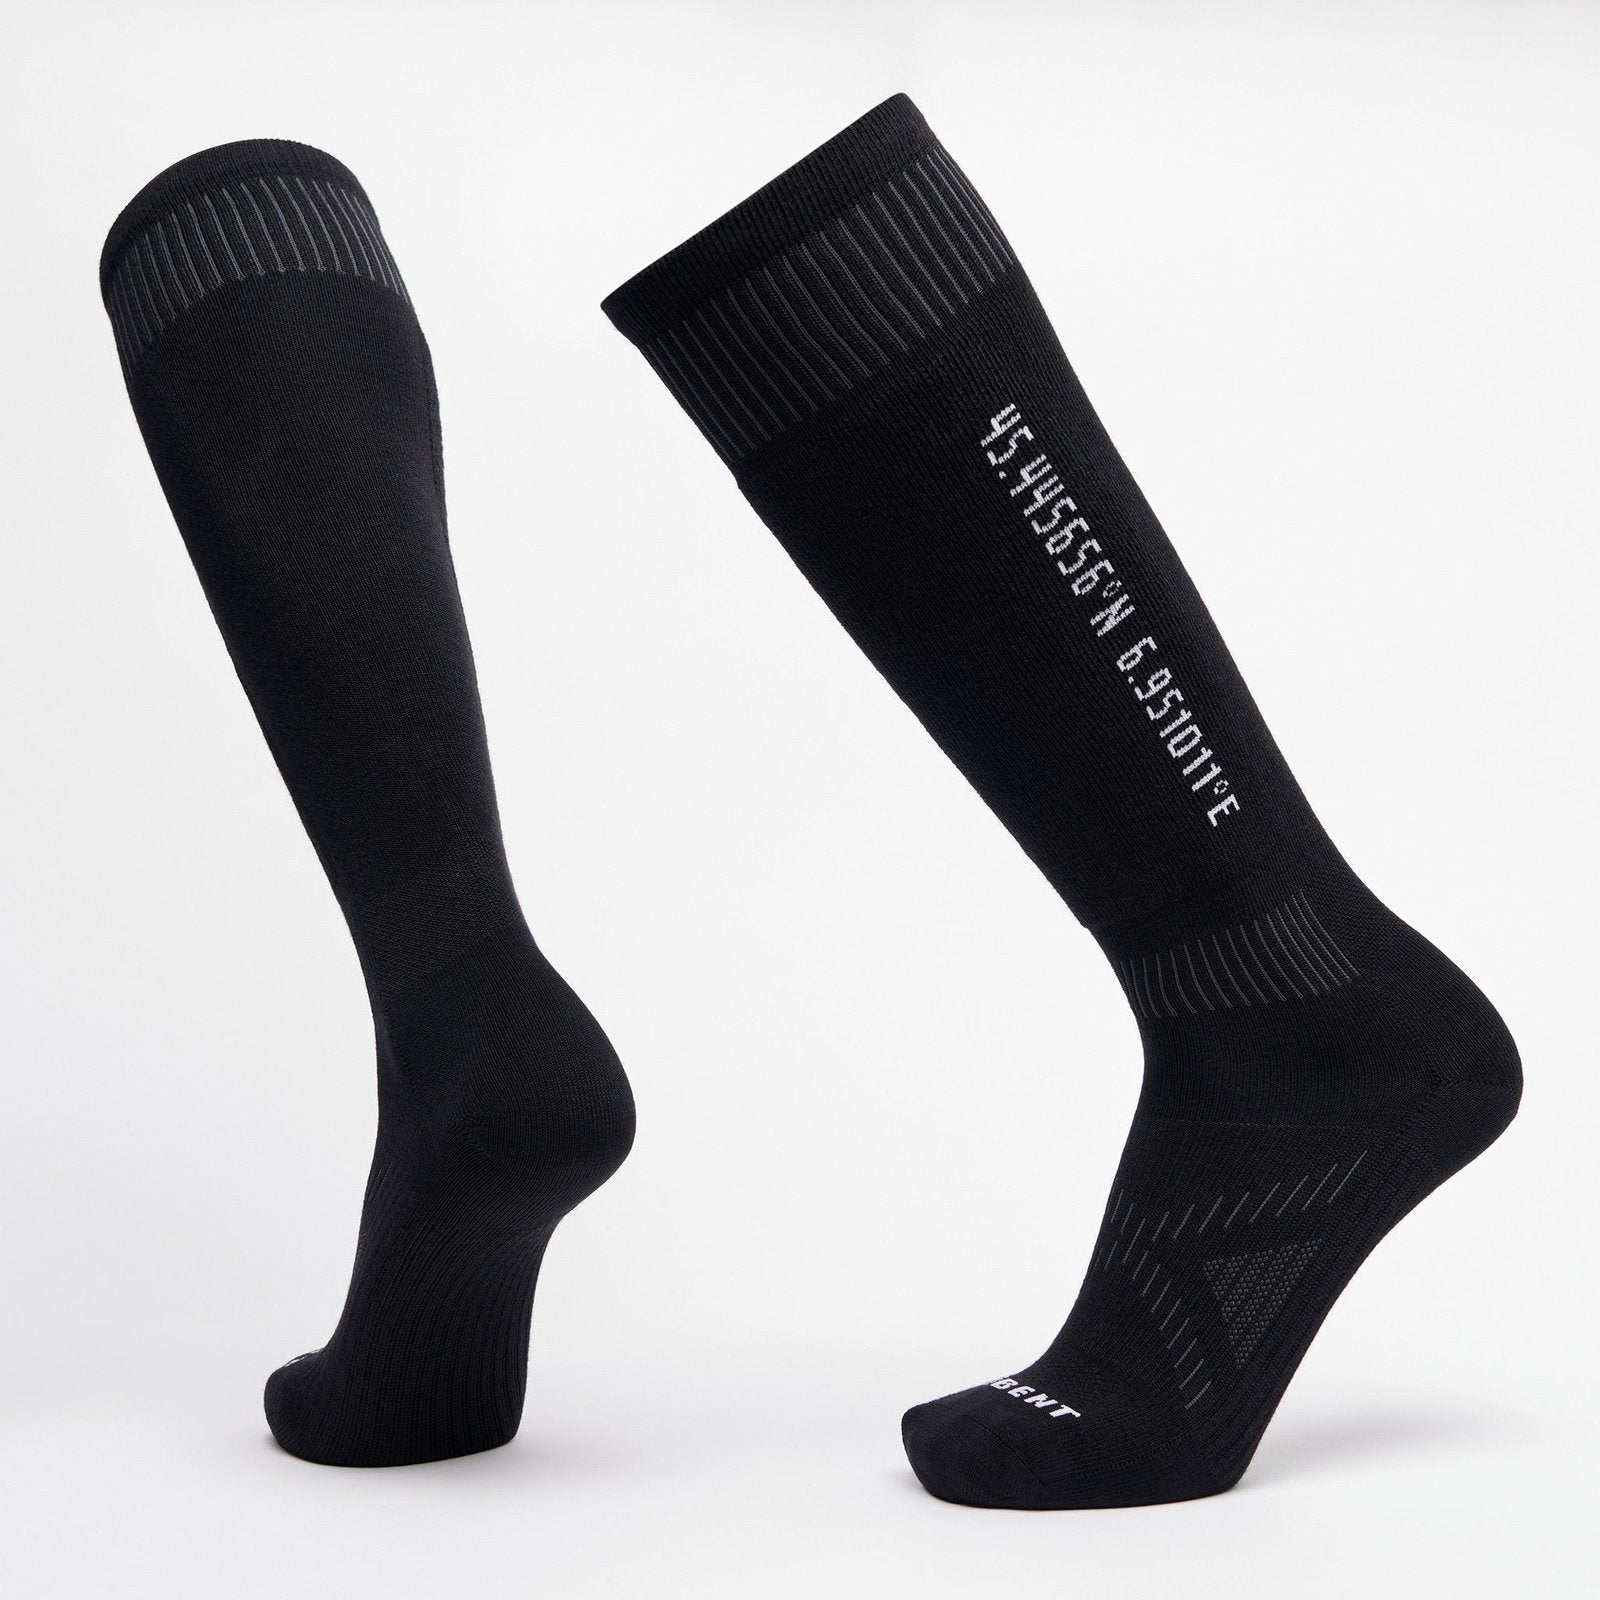 Le Bent Core Ultra Light Snow Socks